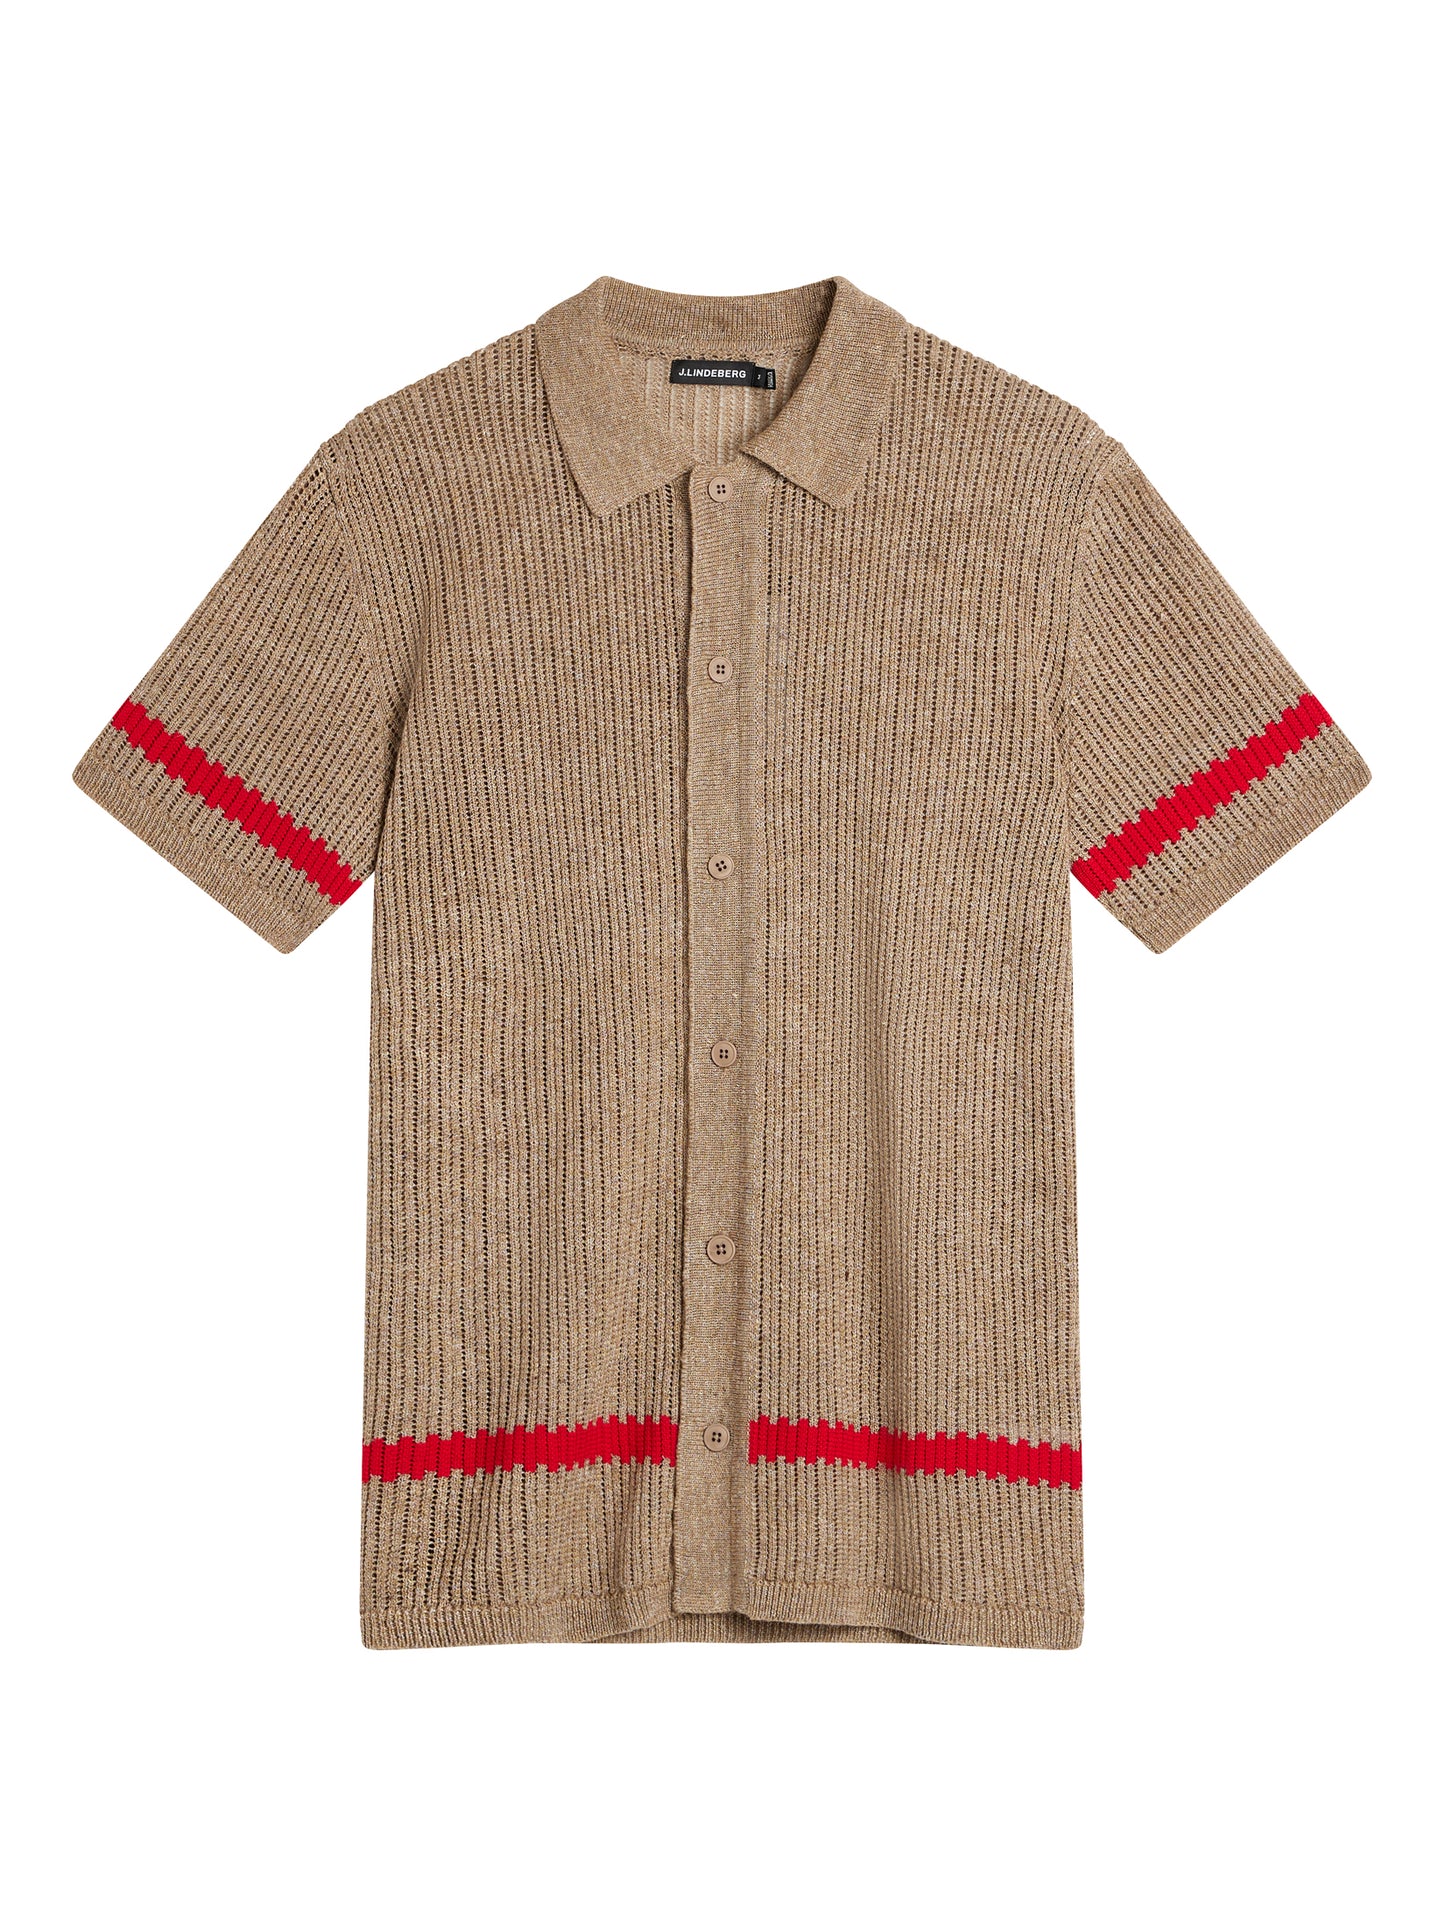 Sky Knitted Shirt / Safari Beige